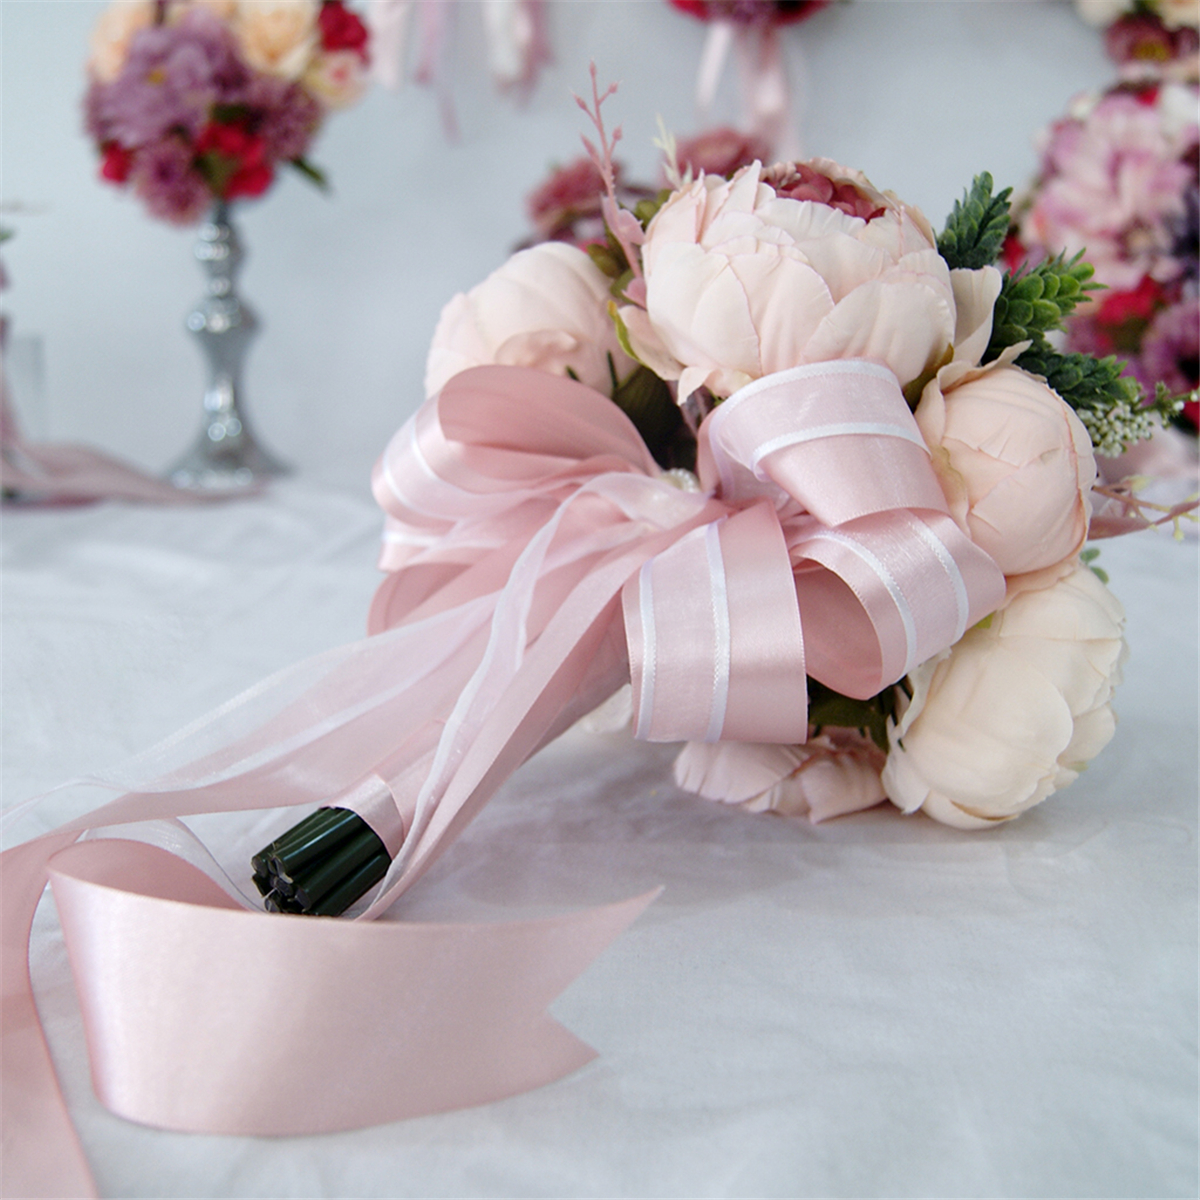 Wedding-Bridal-Bouquets-Handmade-Artificial-Flowers-Decorations-Bride-Accessories-1643090-6